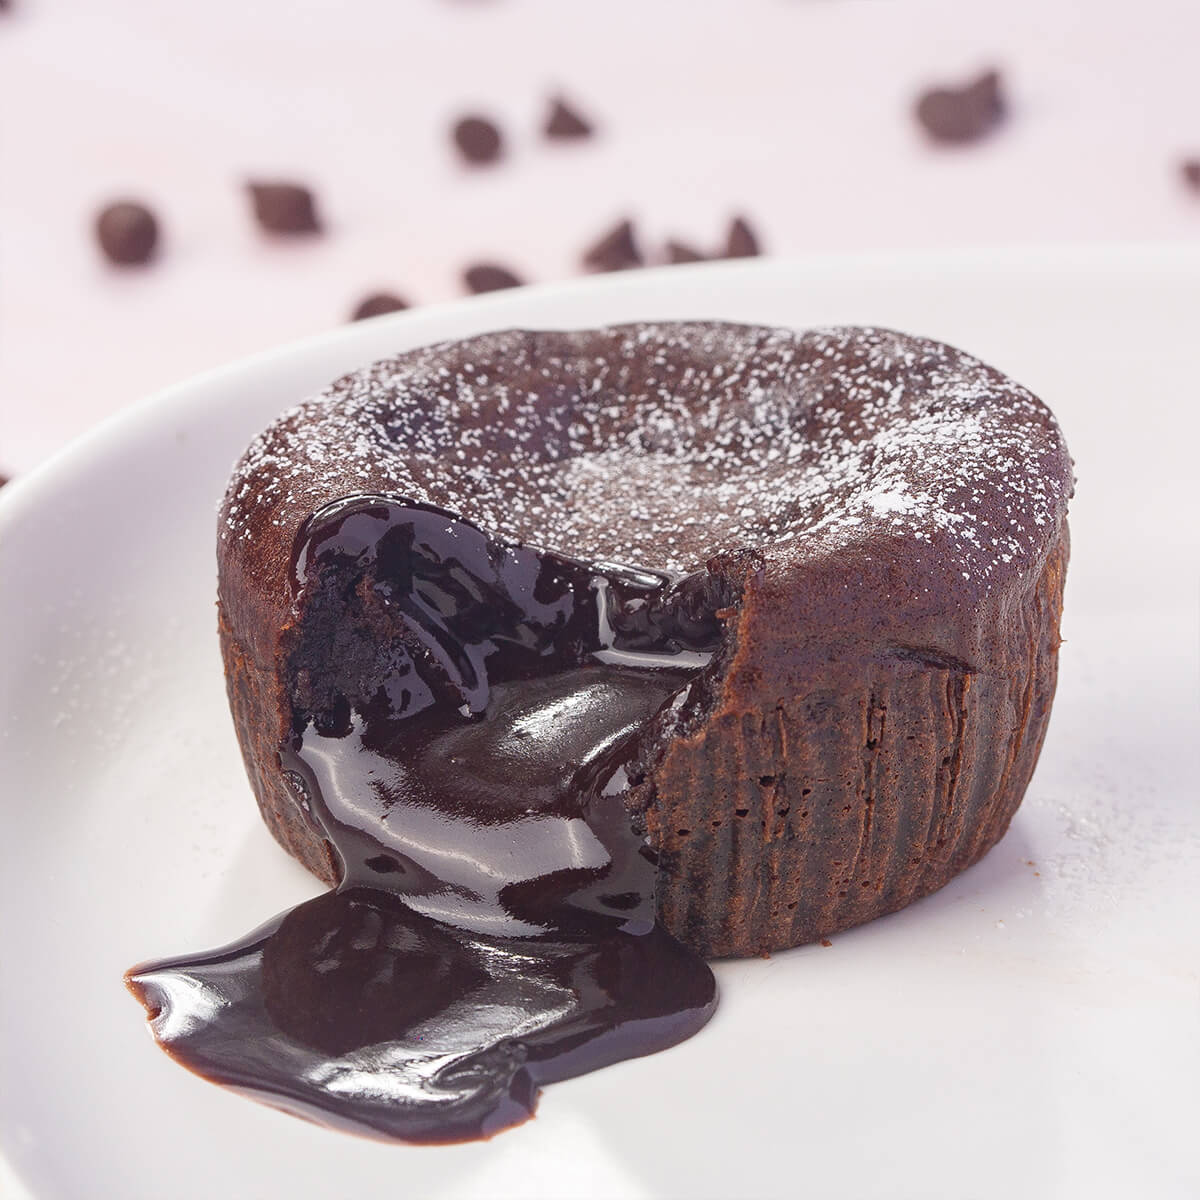 The Original Molten Chocolate Cake Recipe